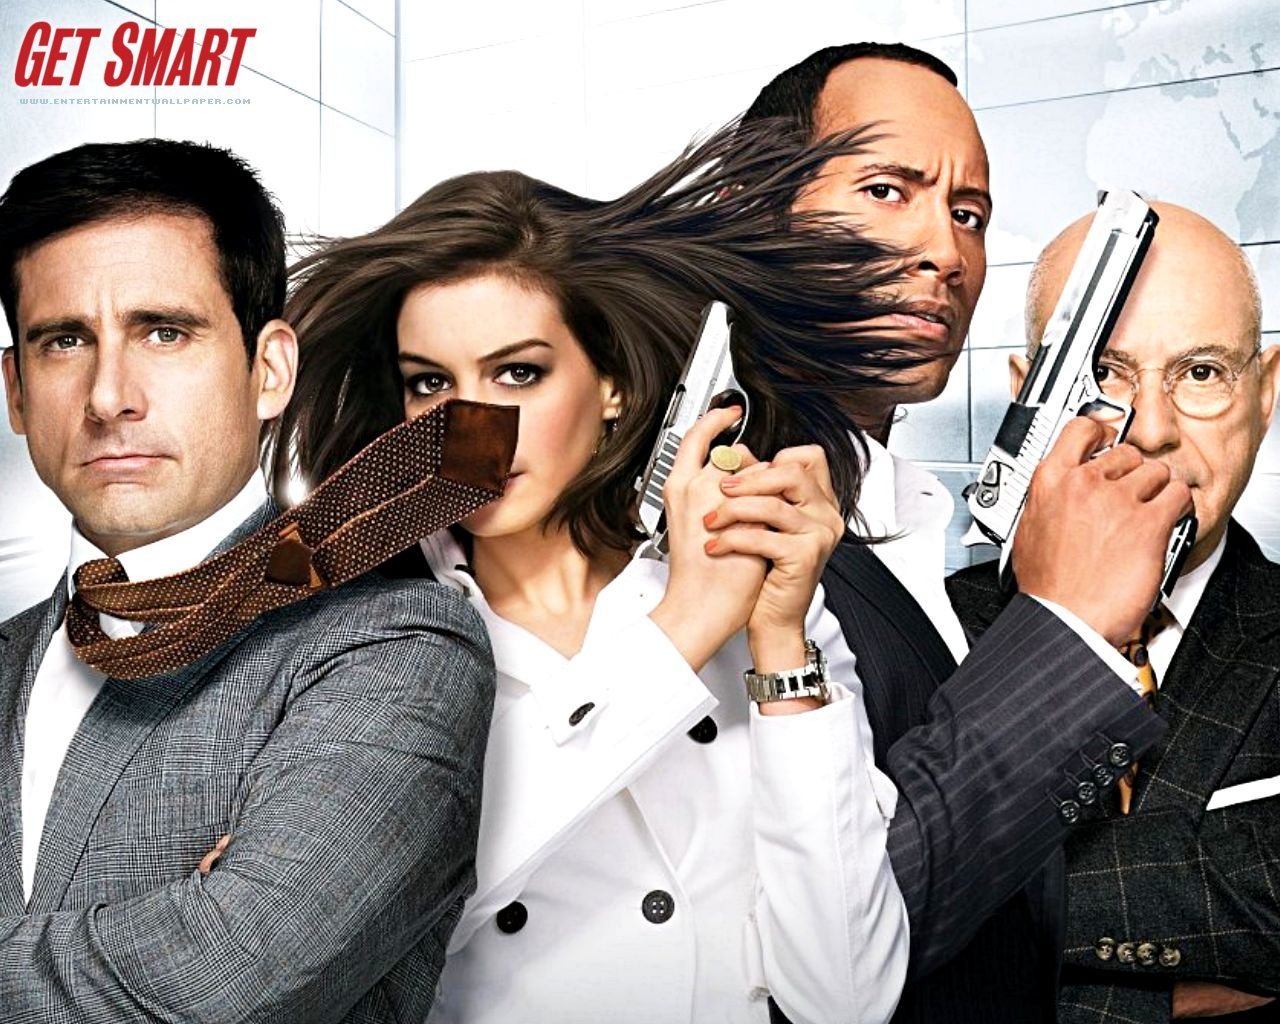 get smart   Get Smart 2008 Movie Wallpaper 22117832 1280x1024